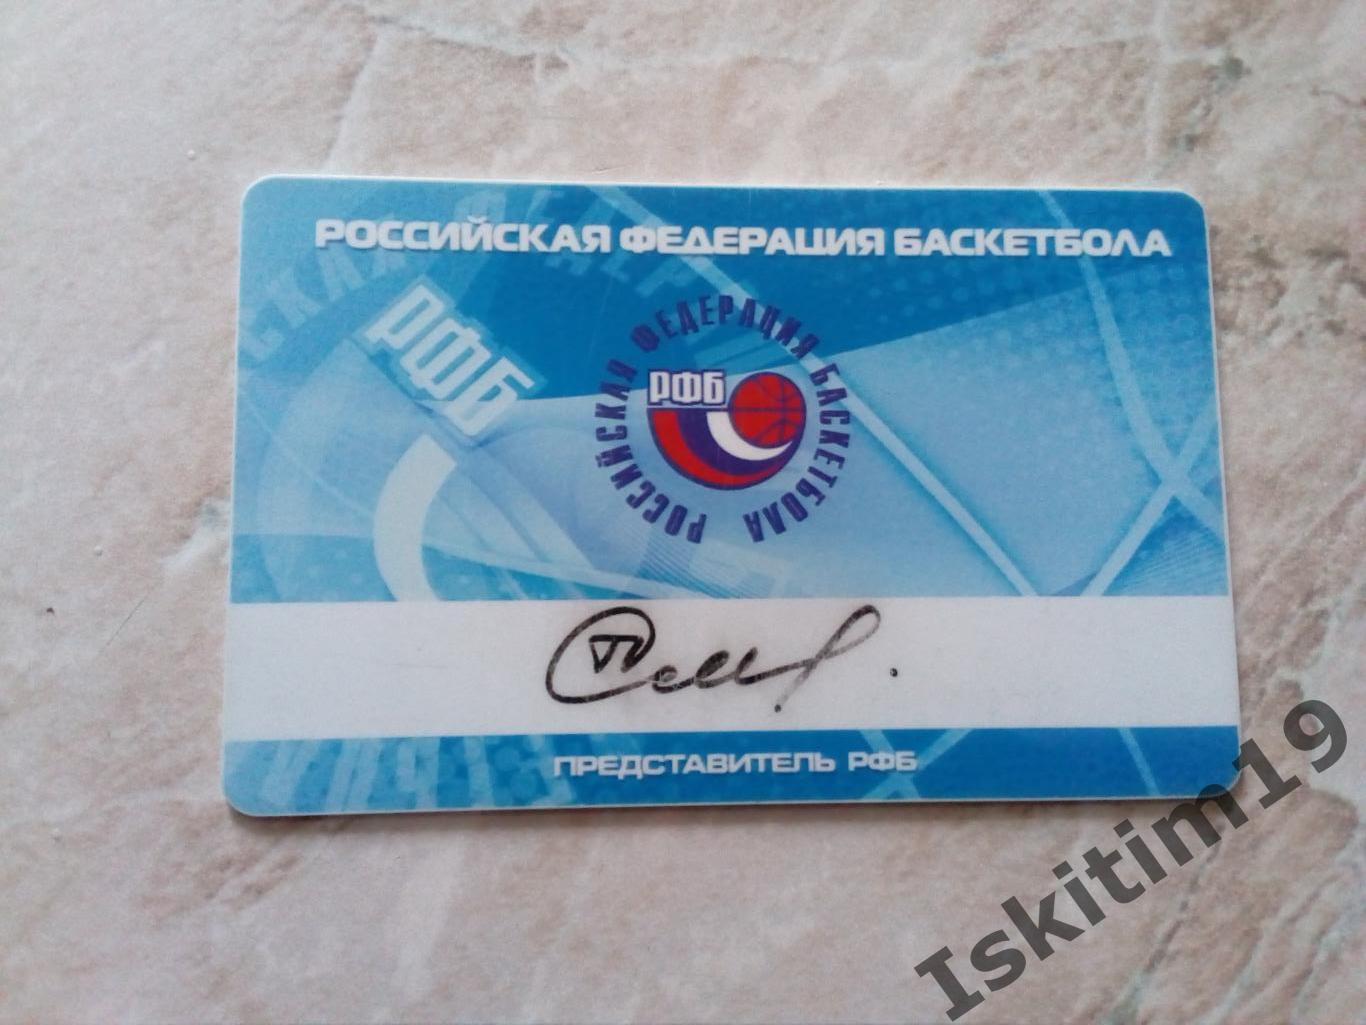 Александр Зайкин, паспорт игрока БК АлтайБаскет (Барнаул) 1